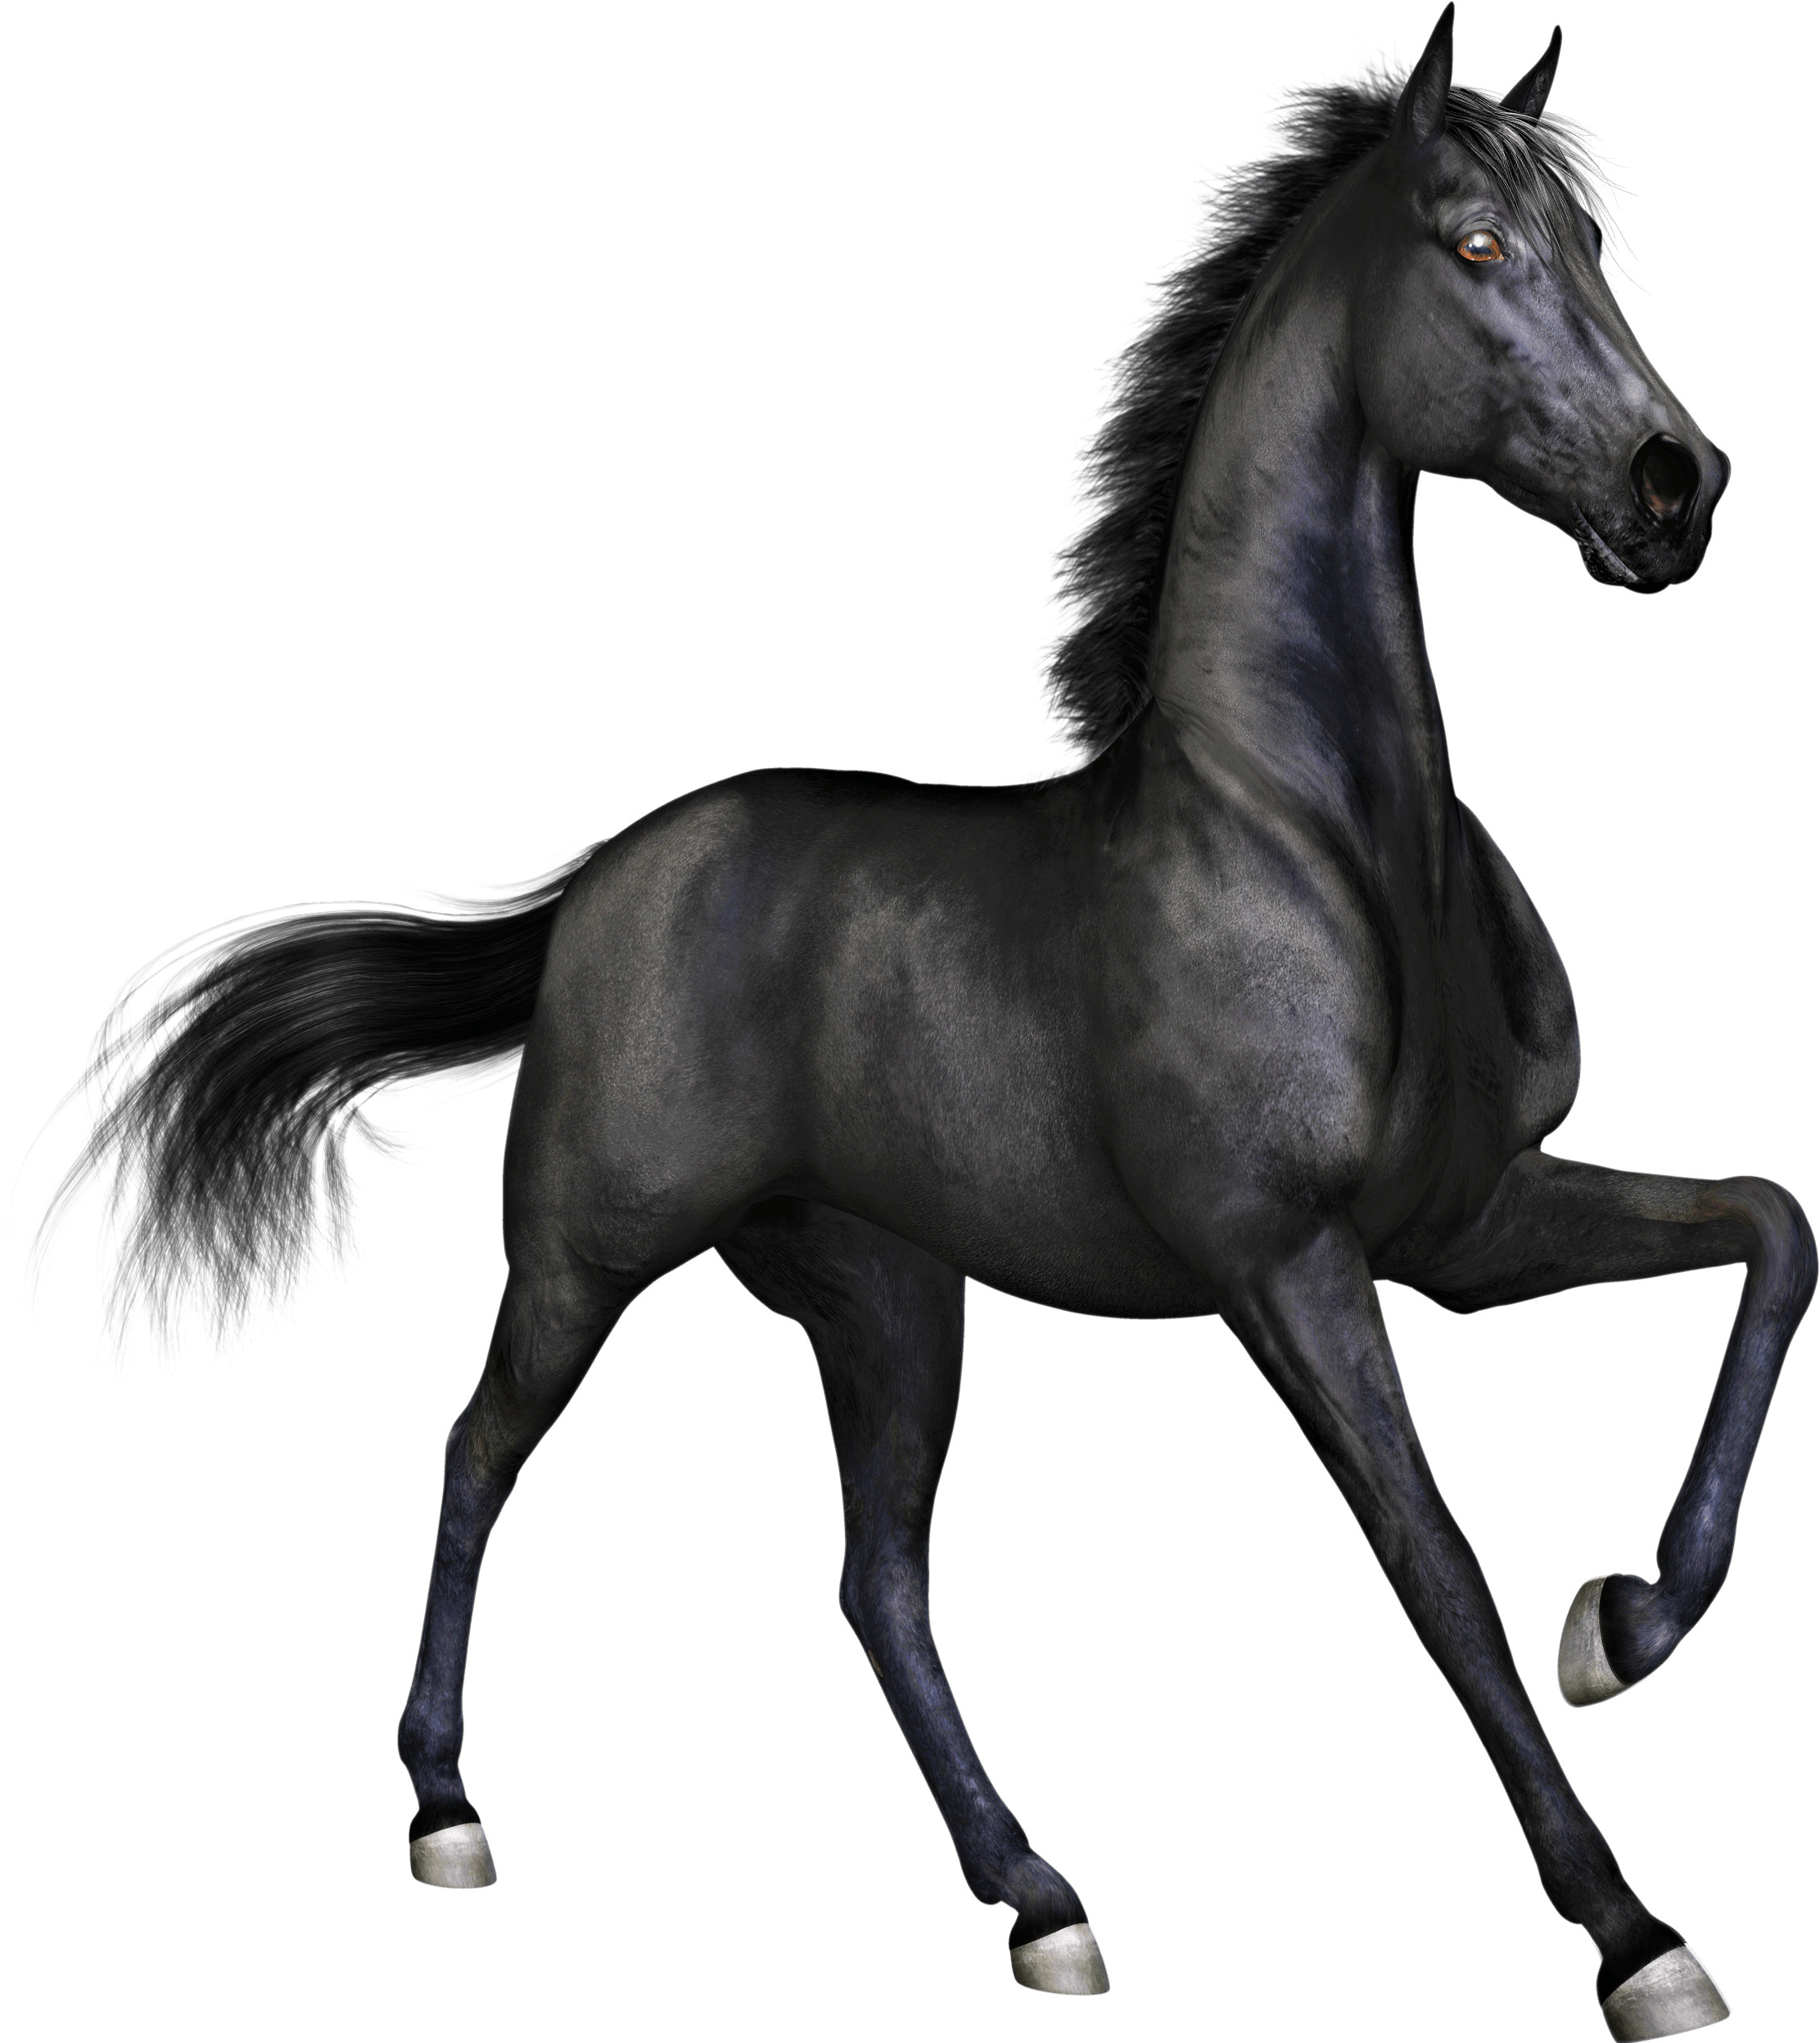 Black Race Horse icons